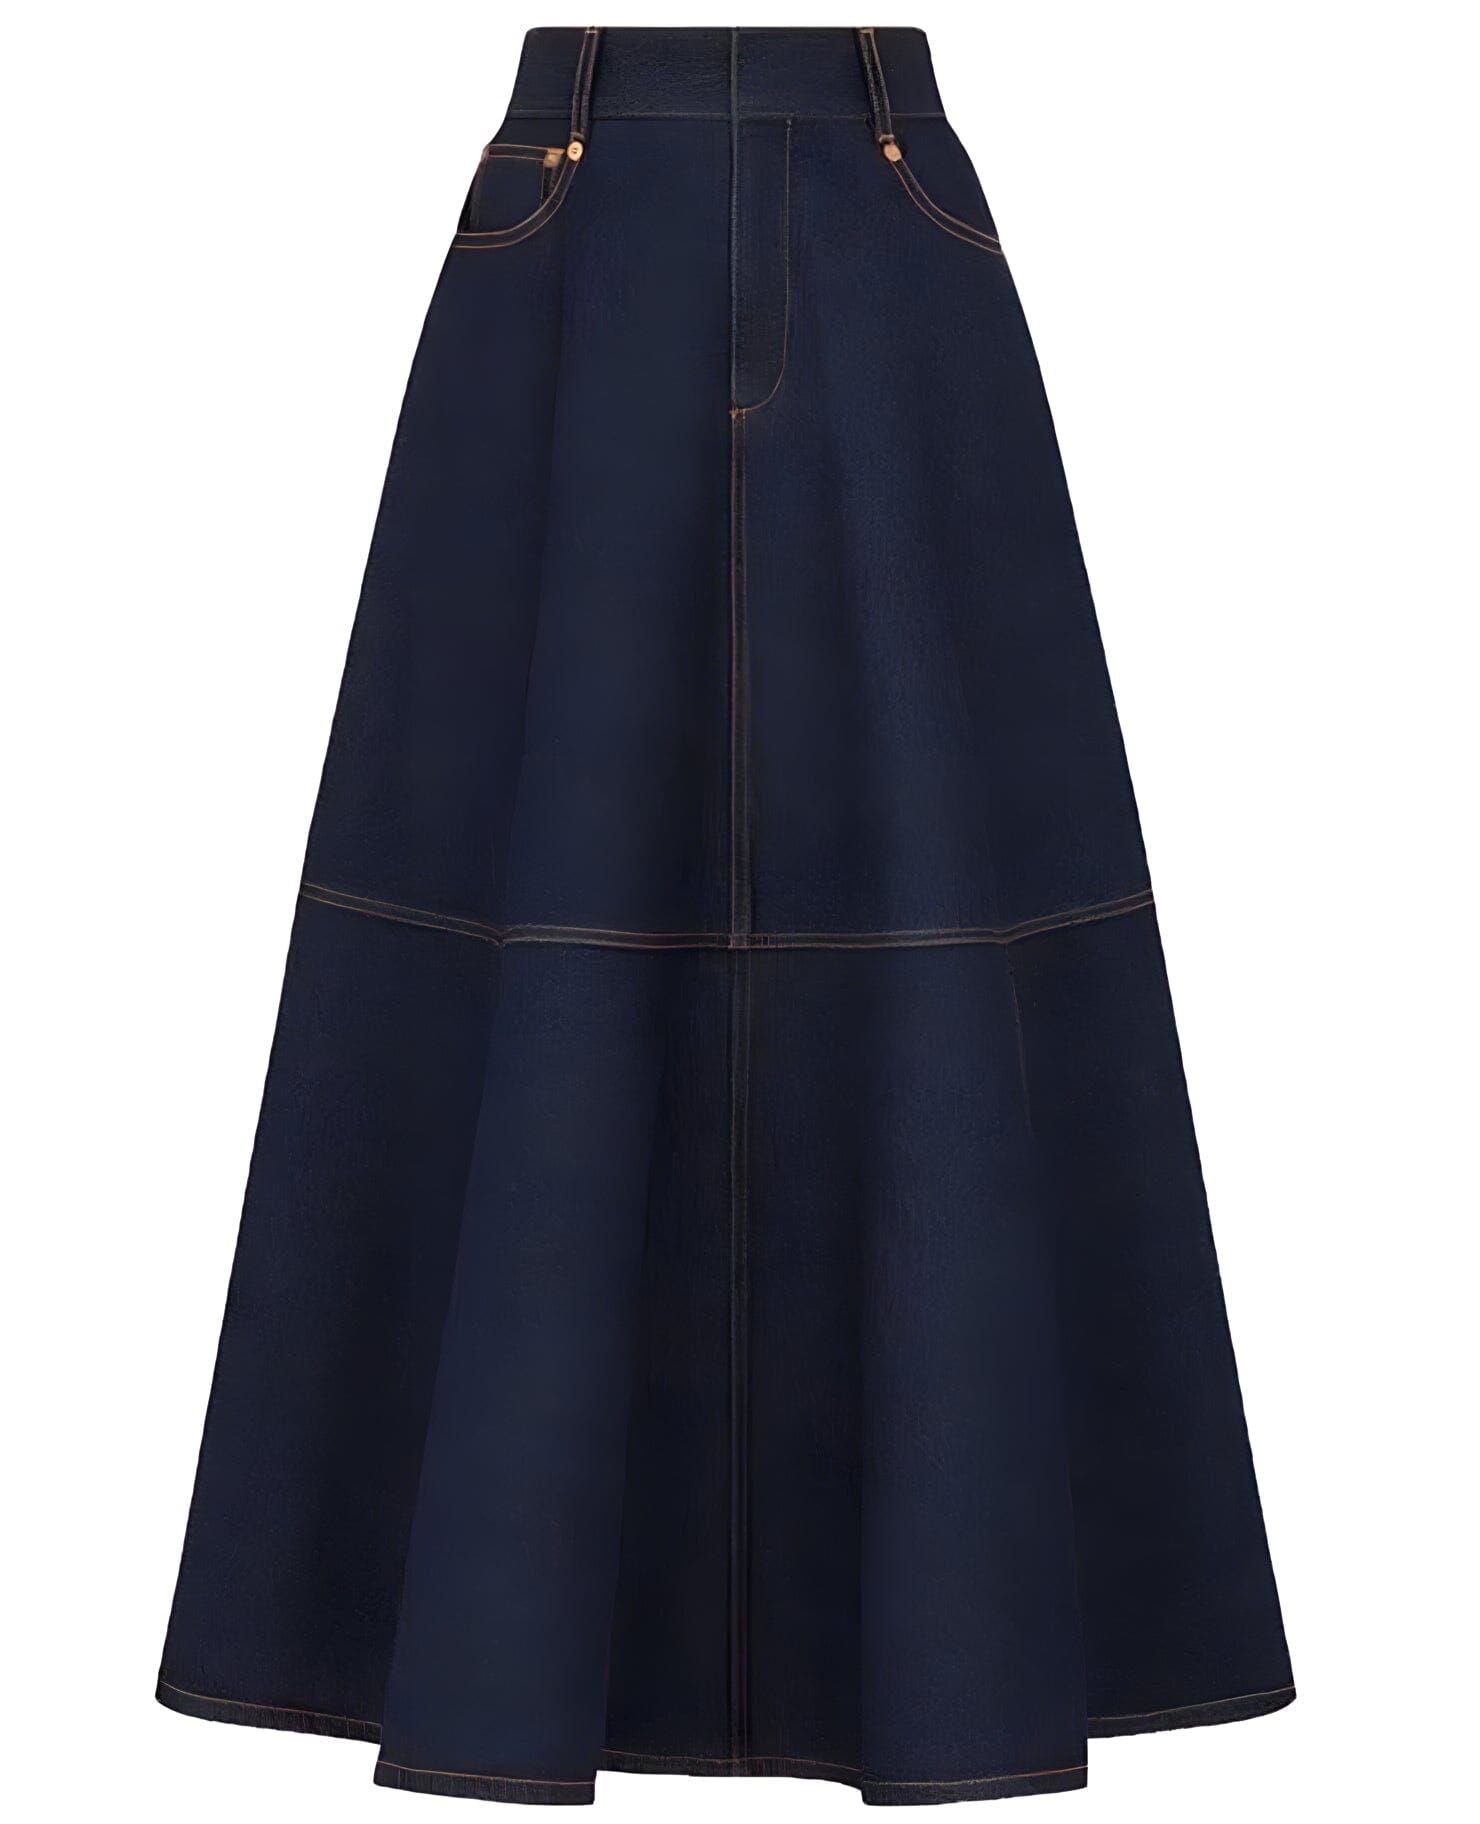 The Ranch High Waist Denim Skirt 0 SA Styles S 